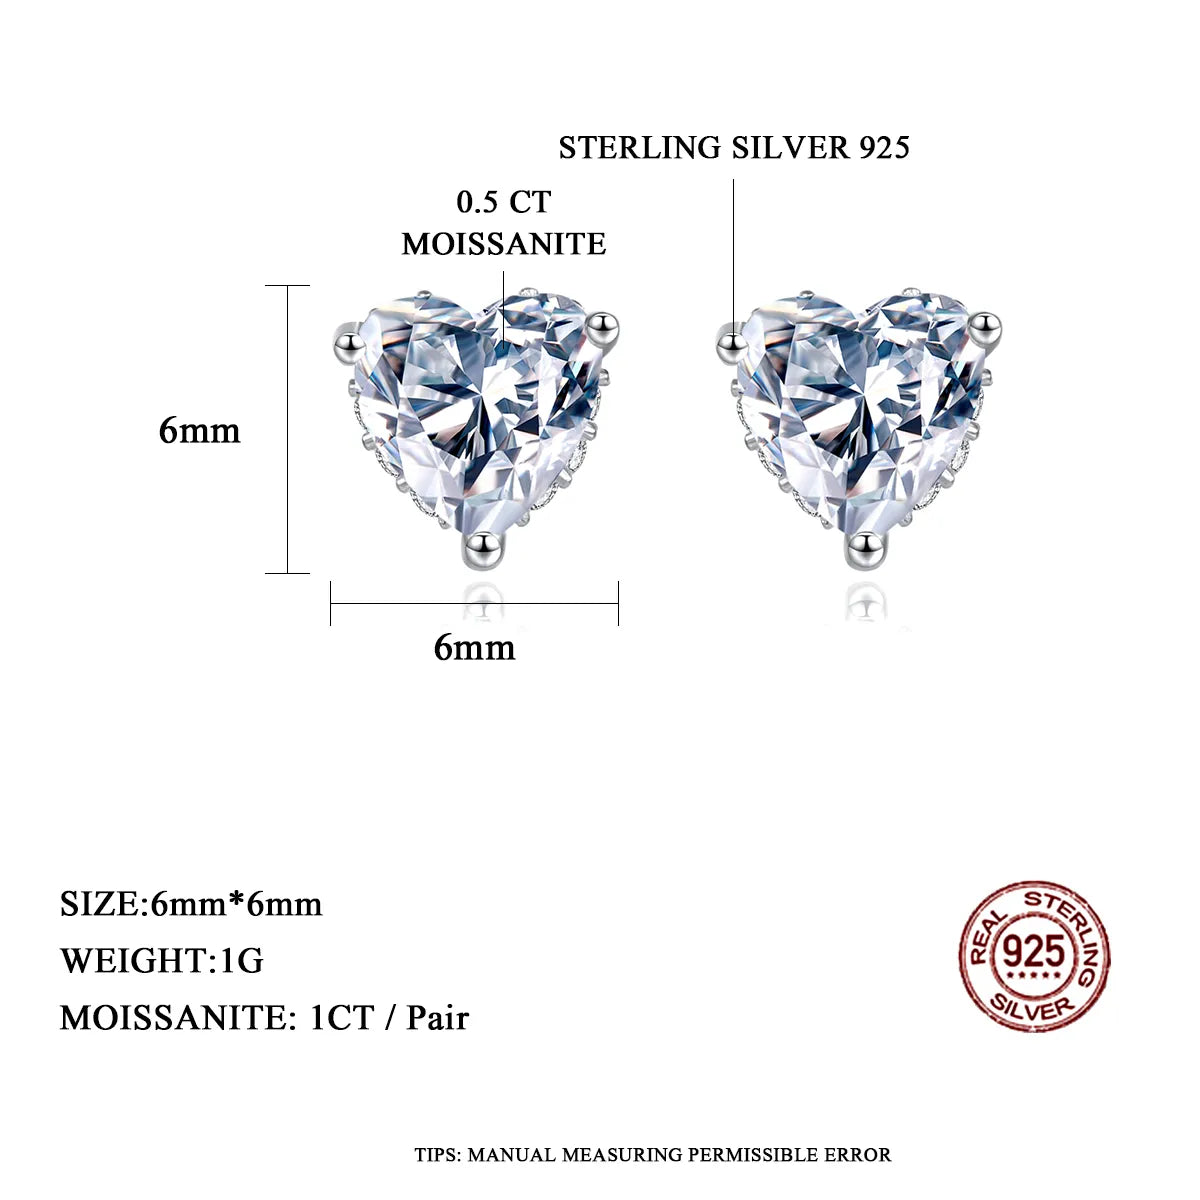 1CT Moissanite Earrings Heart Created Diamond Stone Genuine 925 Silver Women Elegant Luxury Tiny CZ Paved Studs Jewelry Gift